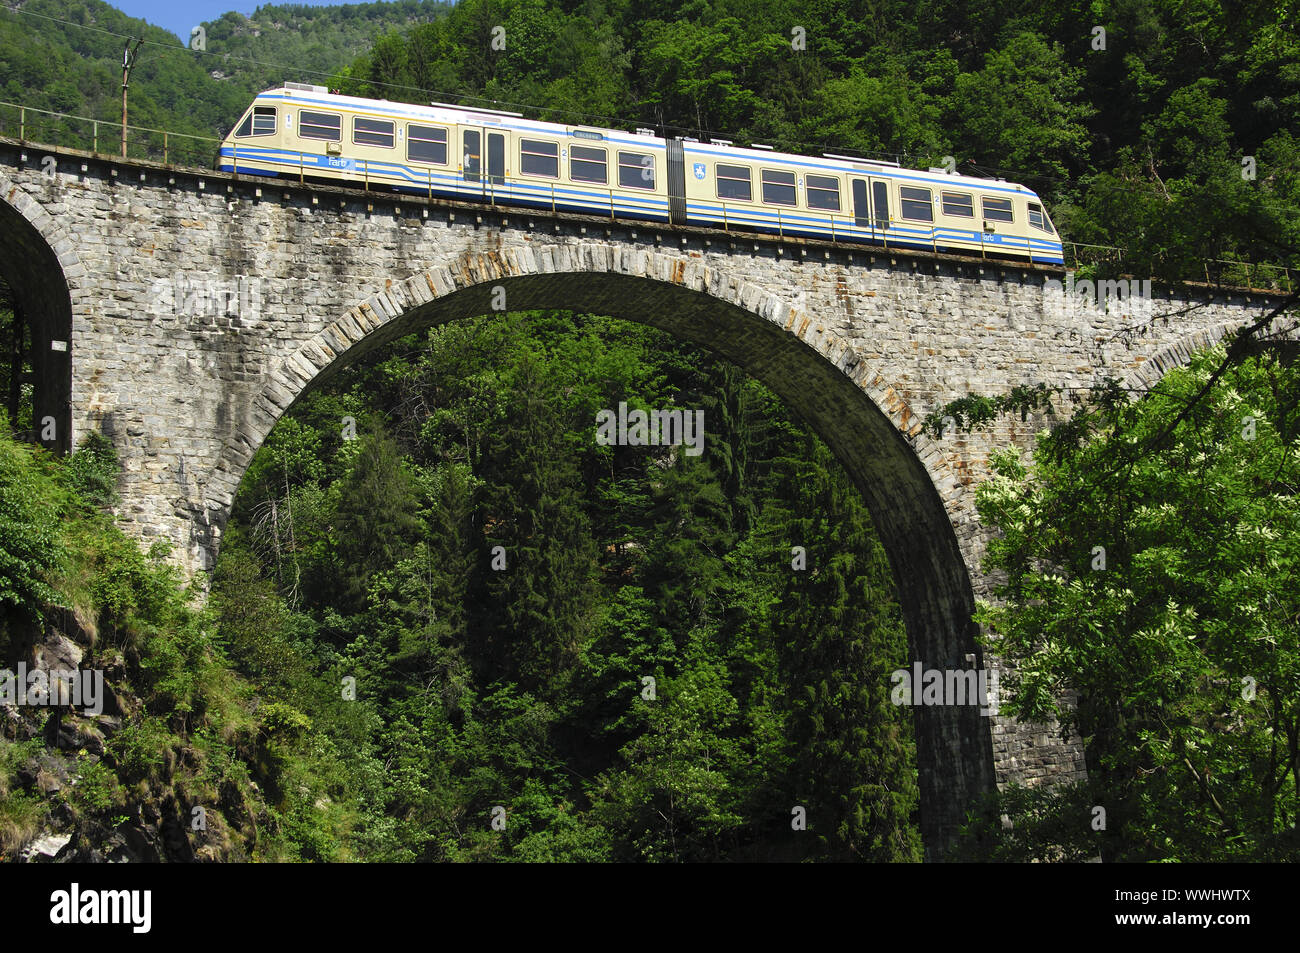 The Centovalli railway on a viaduct in Centovalli Stock Photo